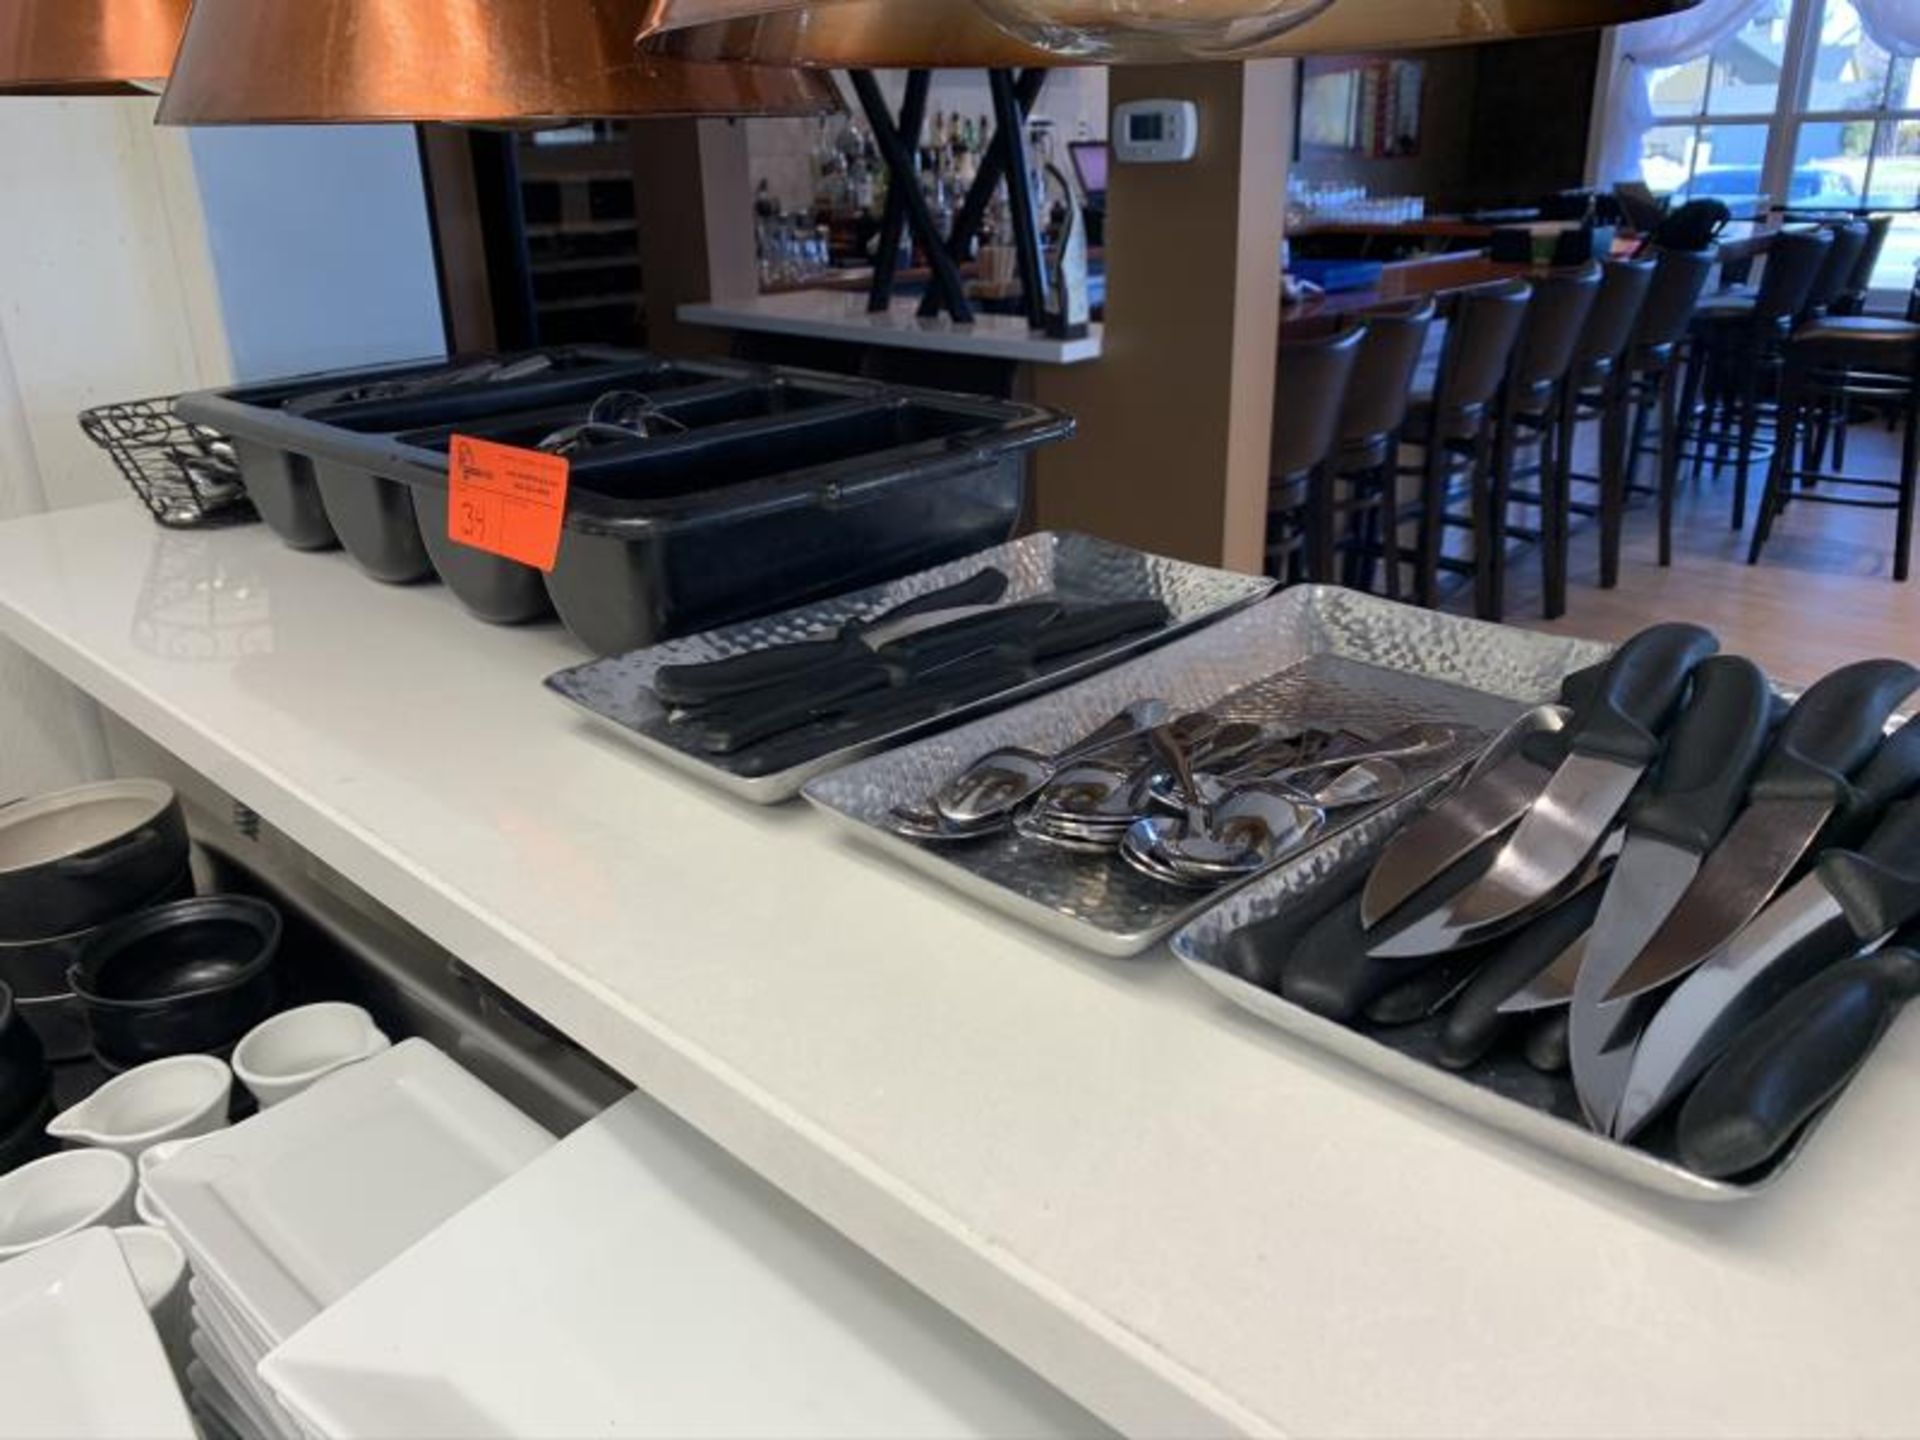 Victornox knives & stainless steel flatware